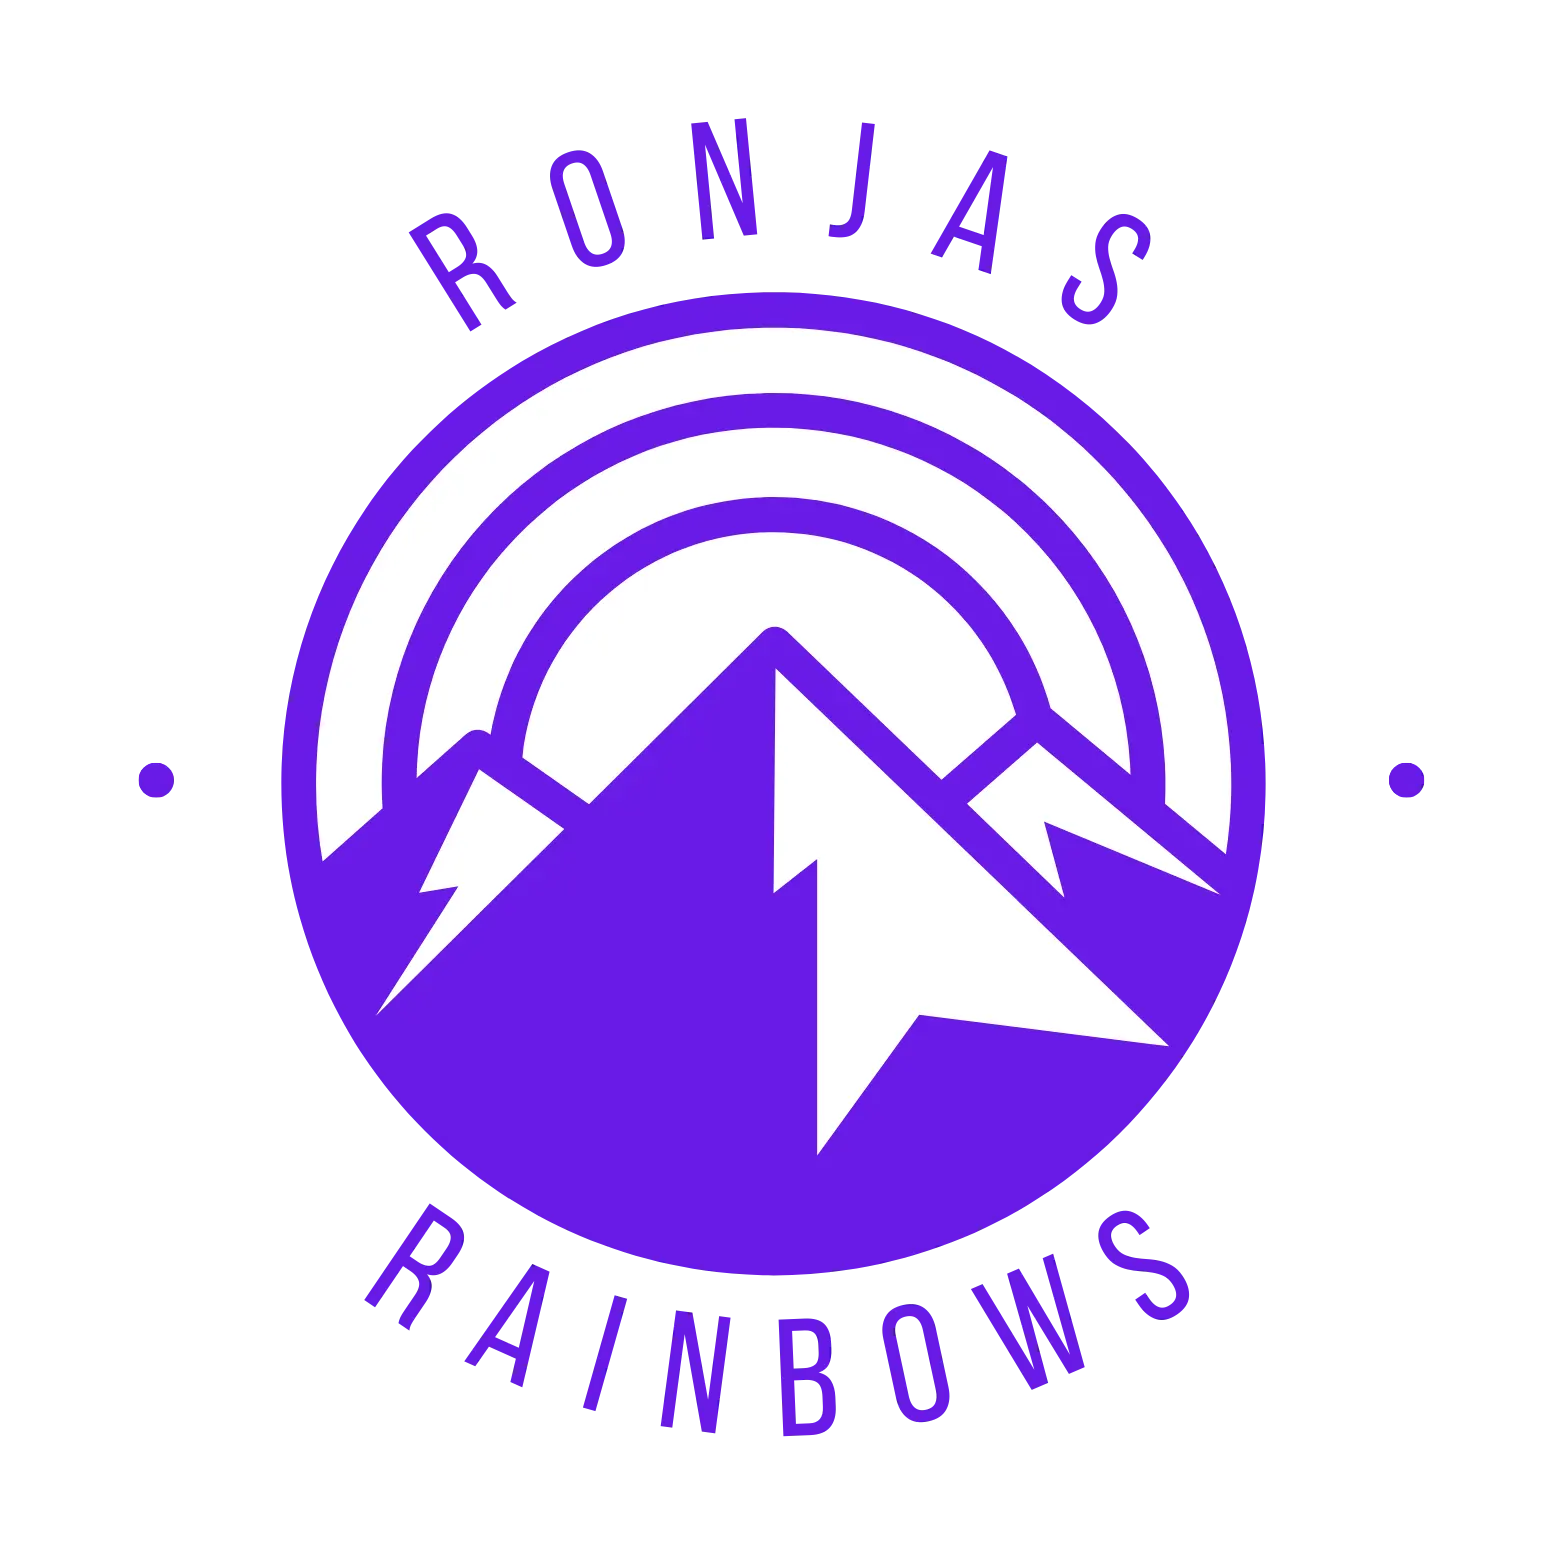 Ronjasrainbows